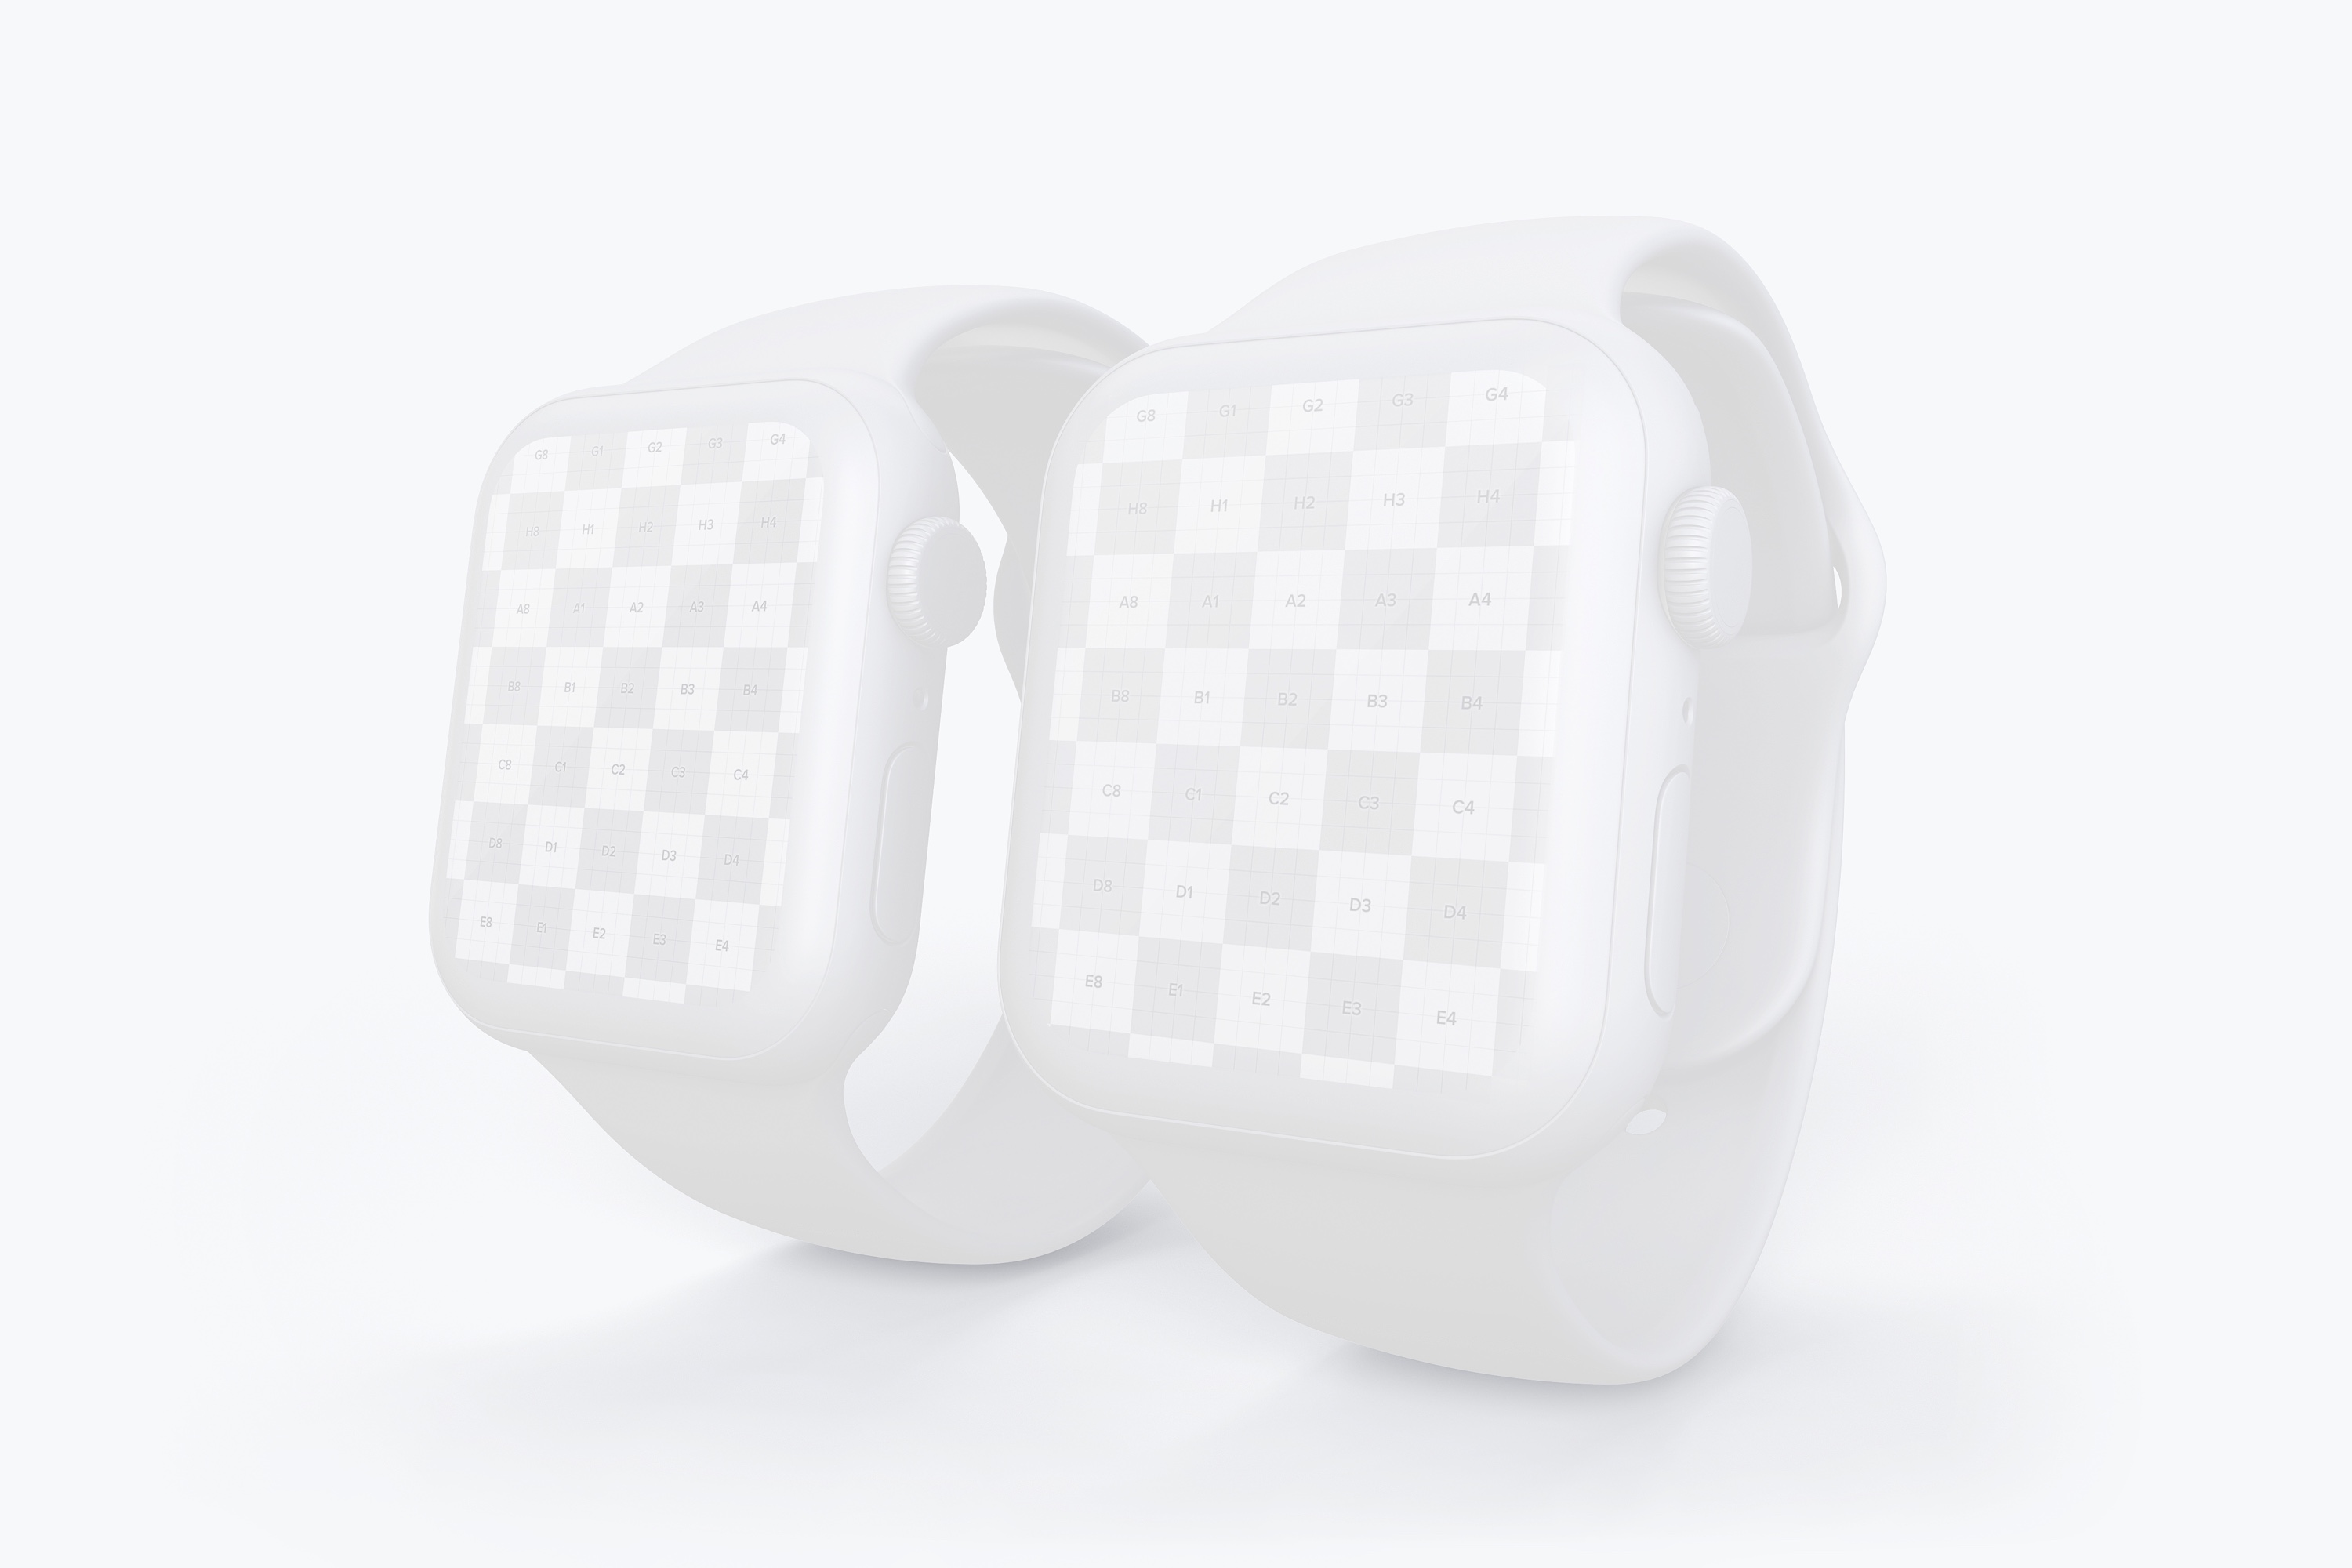 Apple Watch 4智能手表屏幕演示样机模板03 Clay Apple Watch Series 4 (44mm) Mockup 03插图(1)